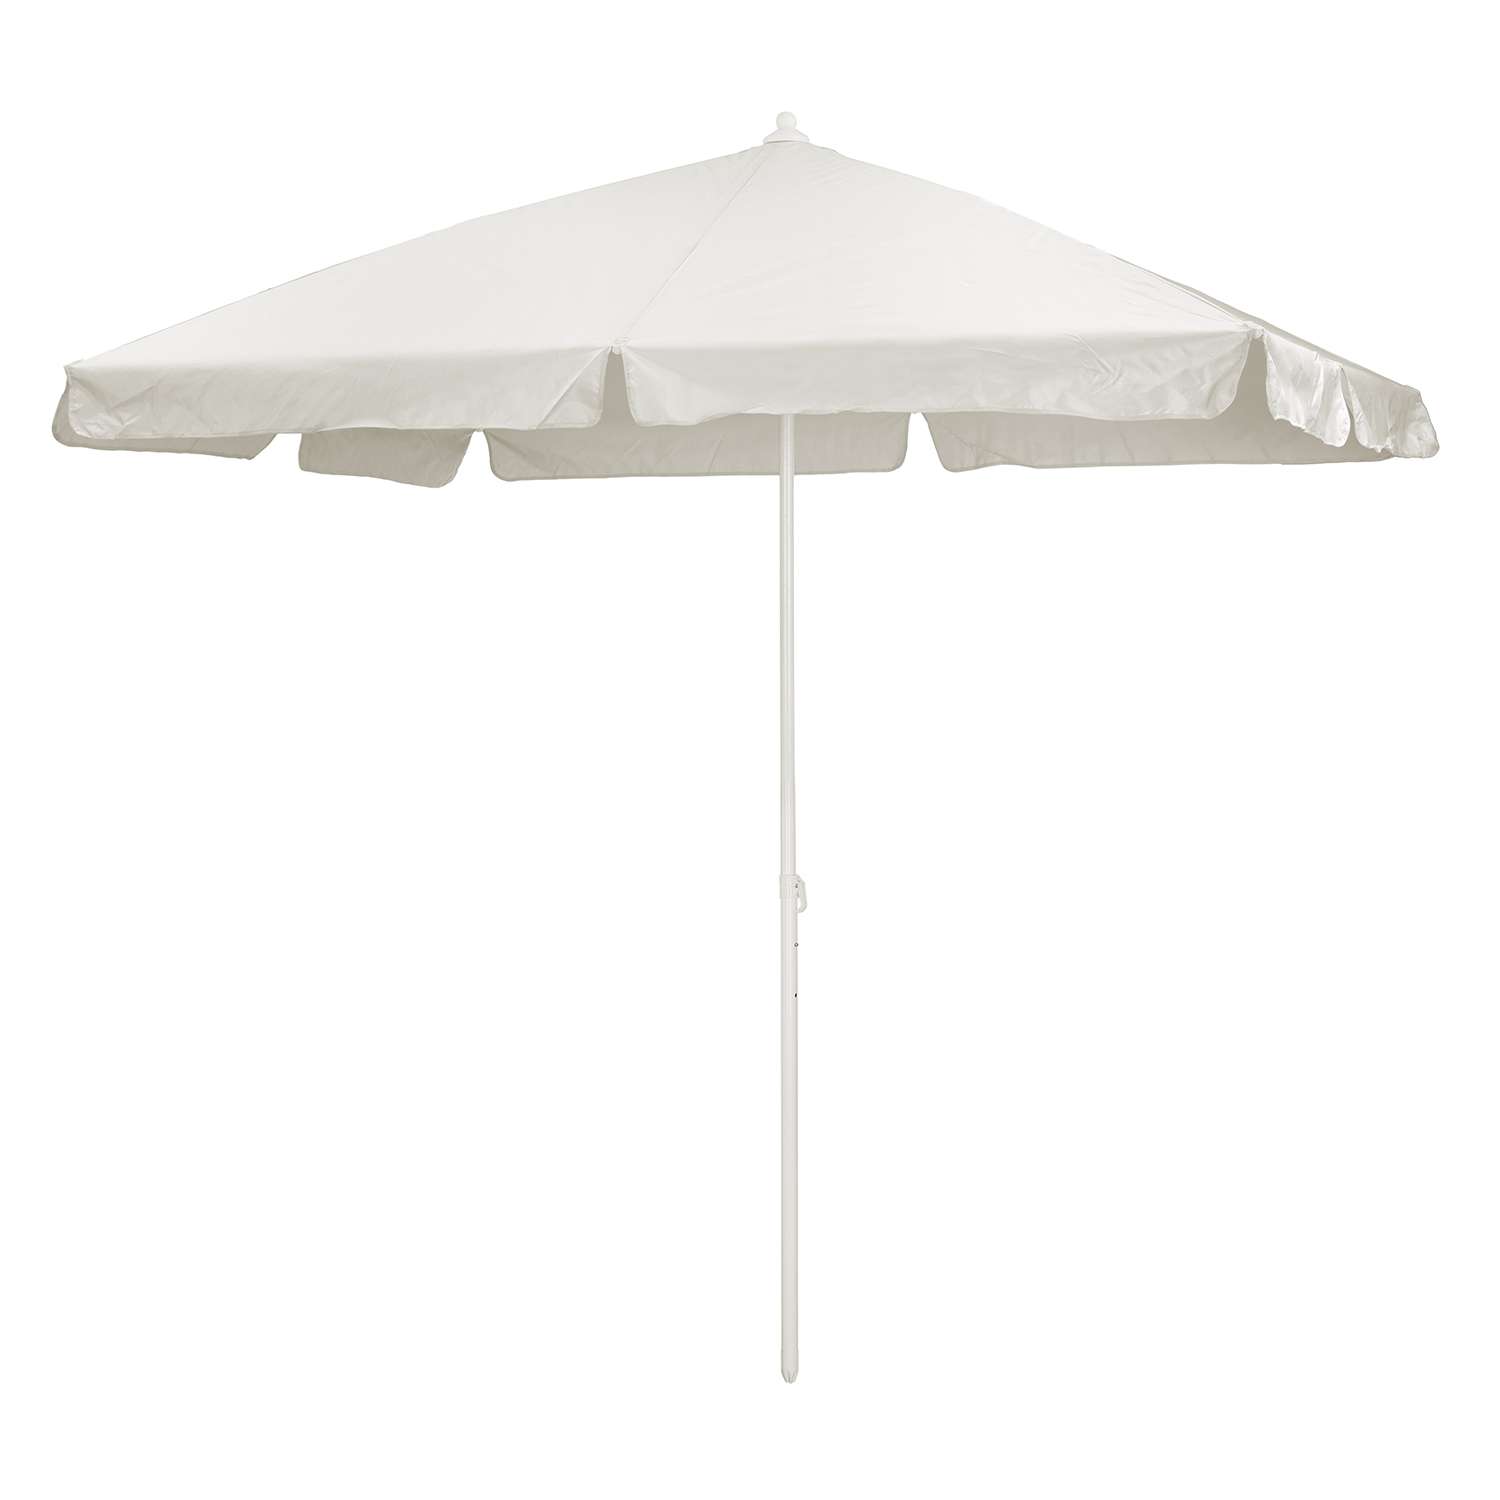 Зонт пляжный BABY STYLE большой 1.75х2.4 м Oxford прямоуголный белый - фото 1